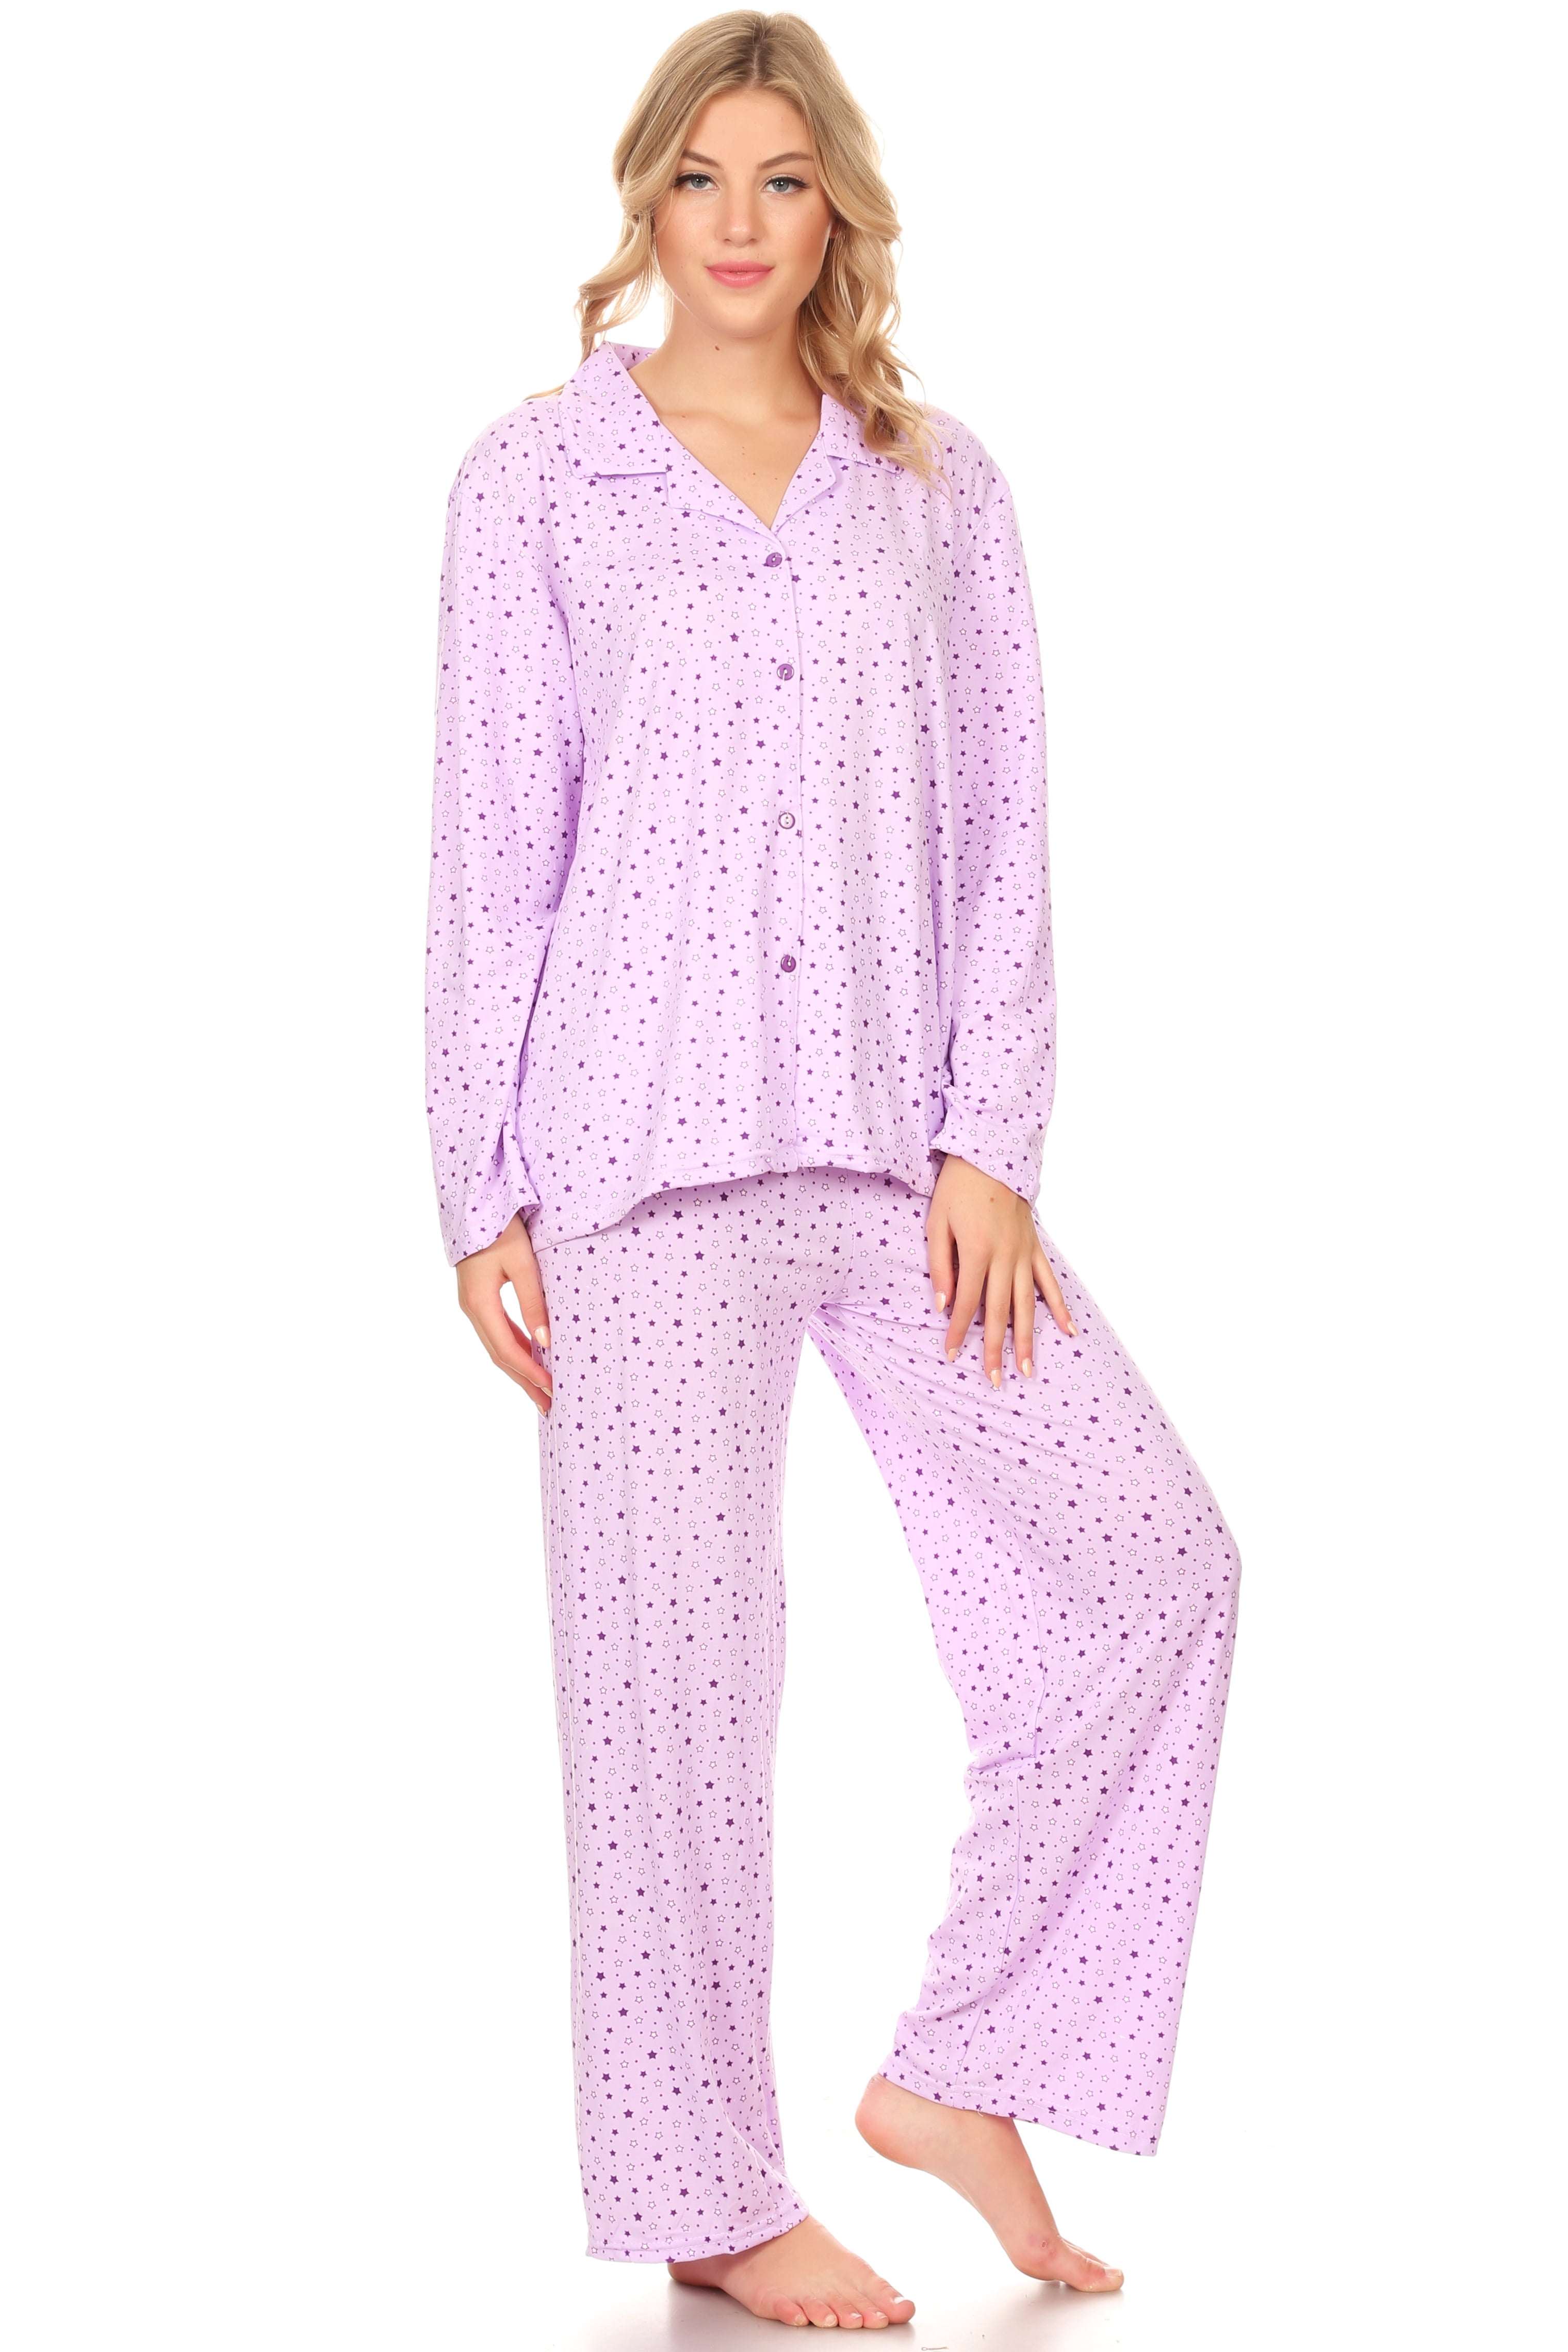 Z2151 Womens Sleepwear Pajamas Woman Long Sleeve Button Down set Purple ...